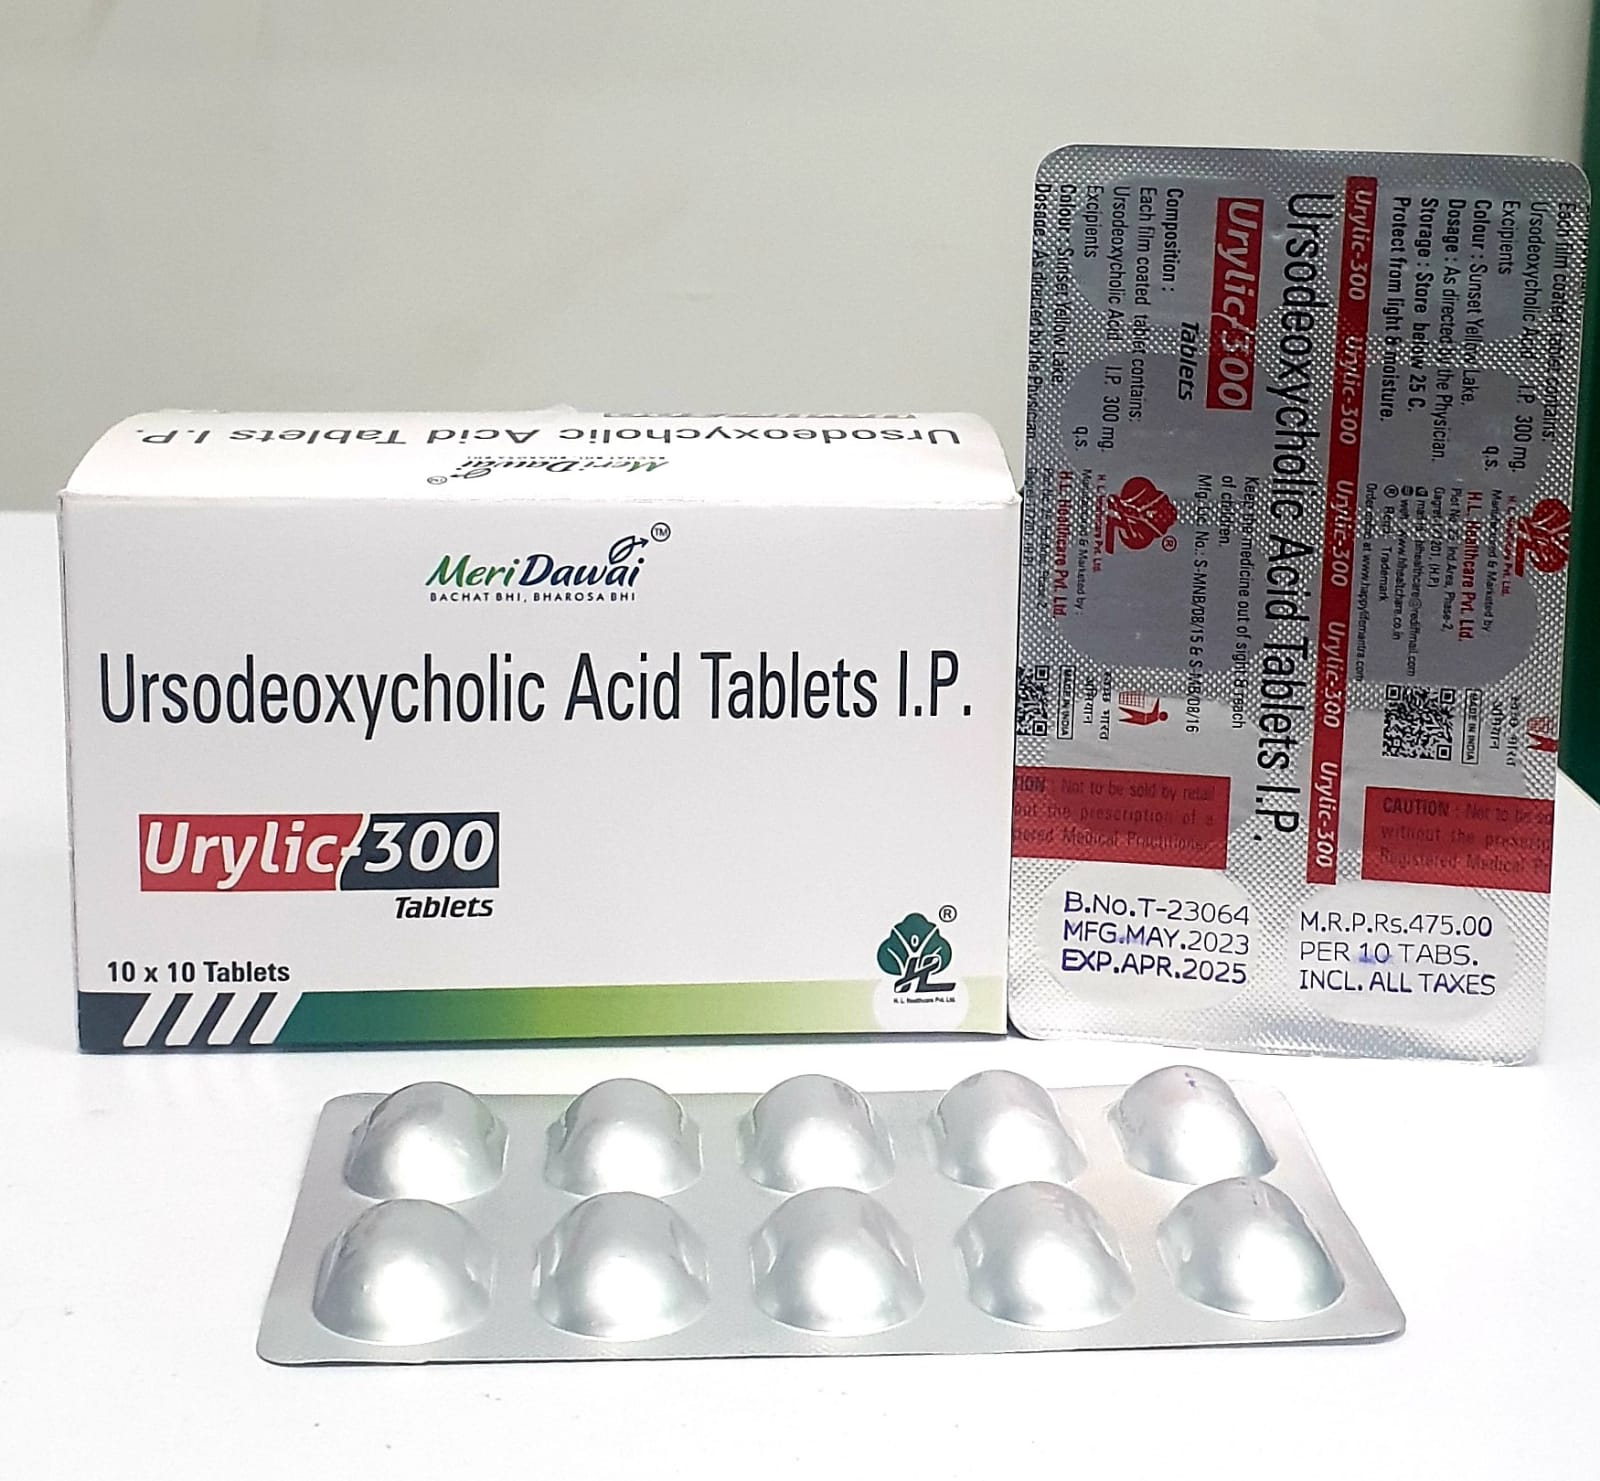 Urosodeoxycholic acid 300 mg tablet